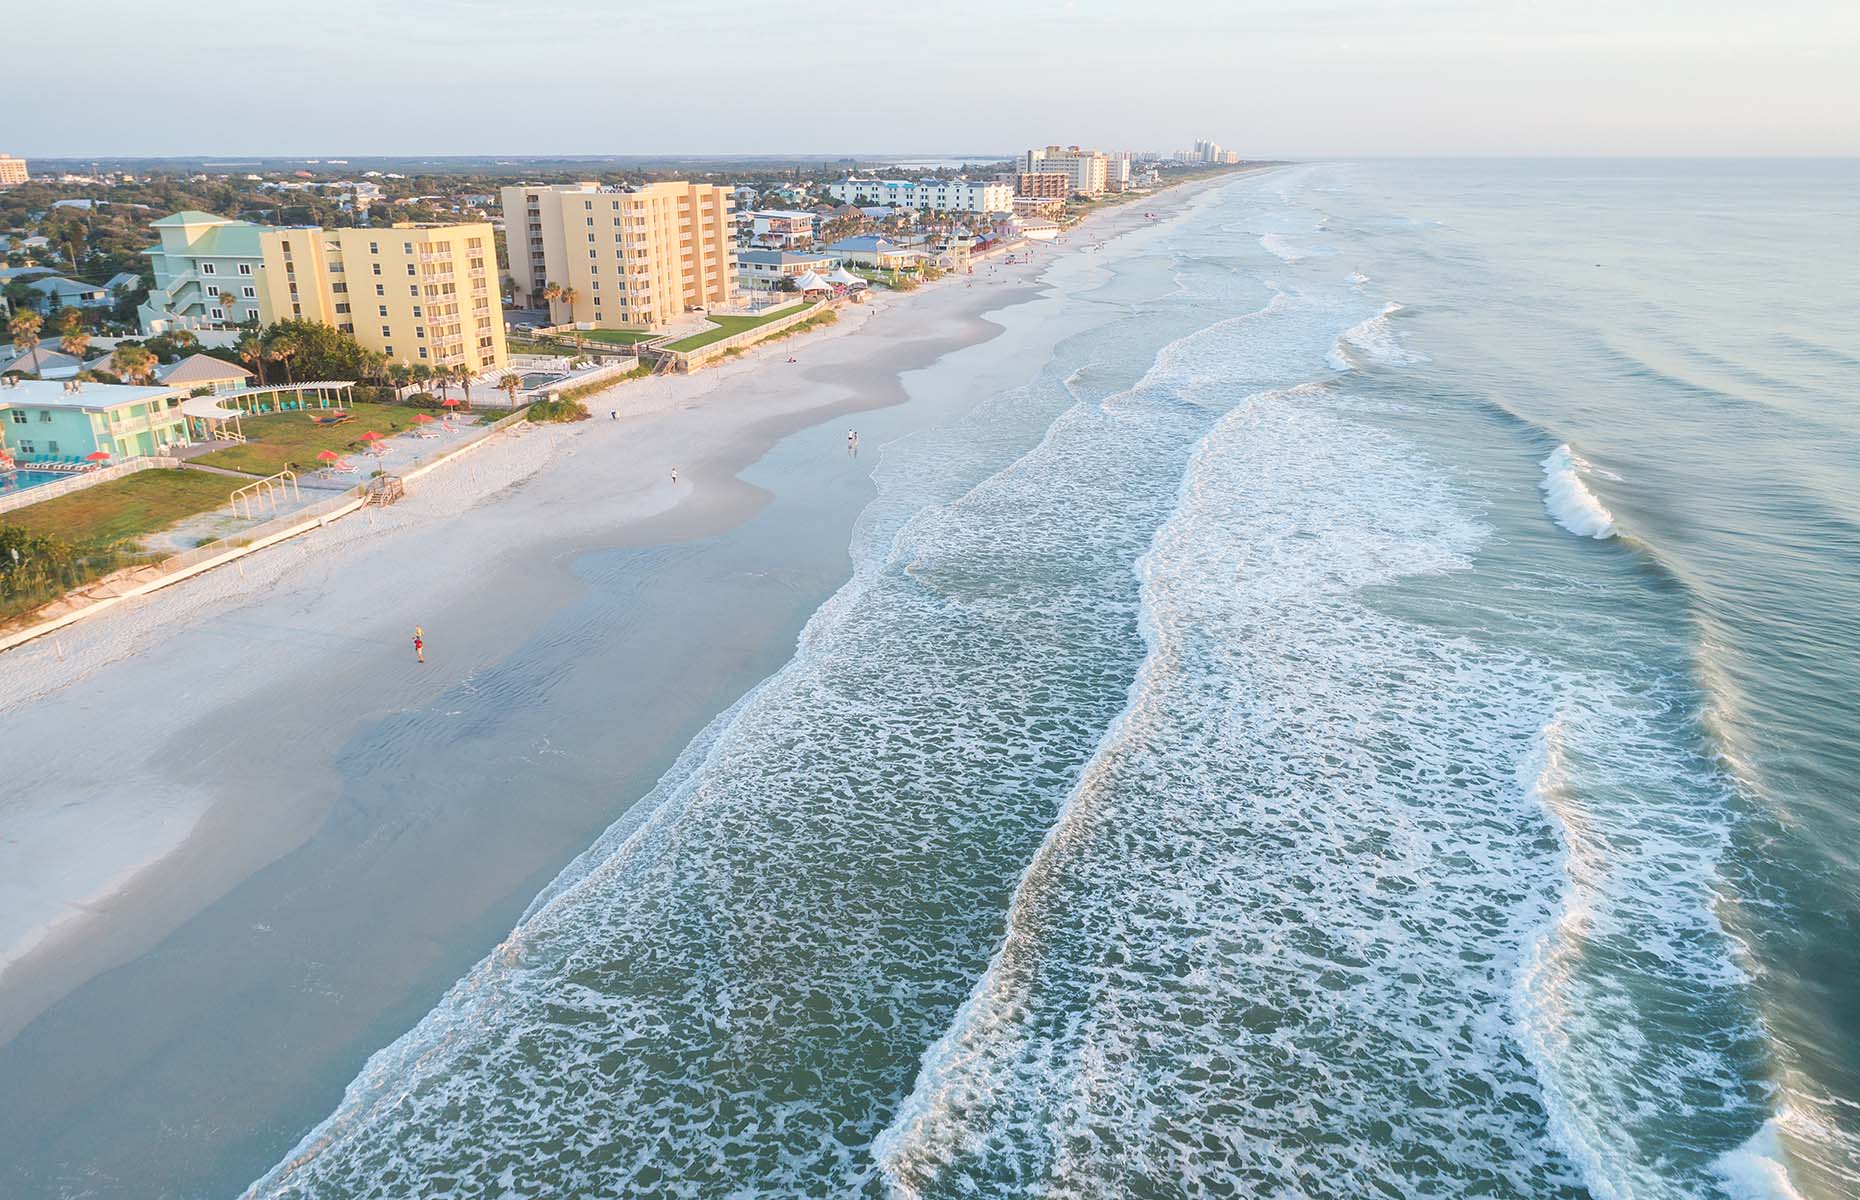 New Smyrna Beach from above (Image: Sky Cinema/Shutterstock)